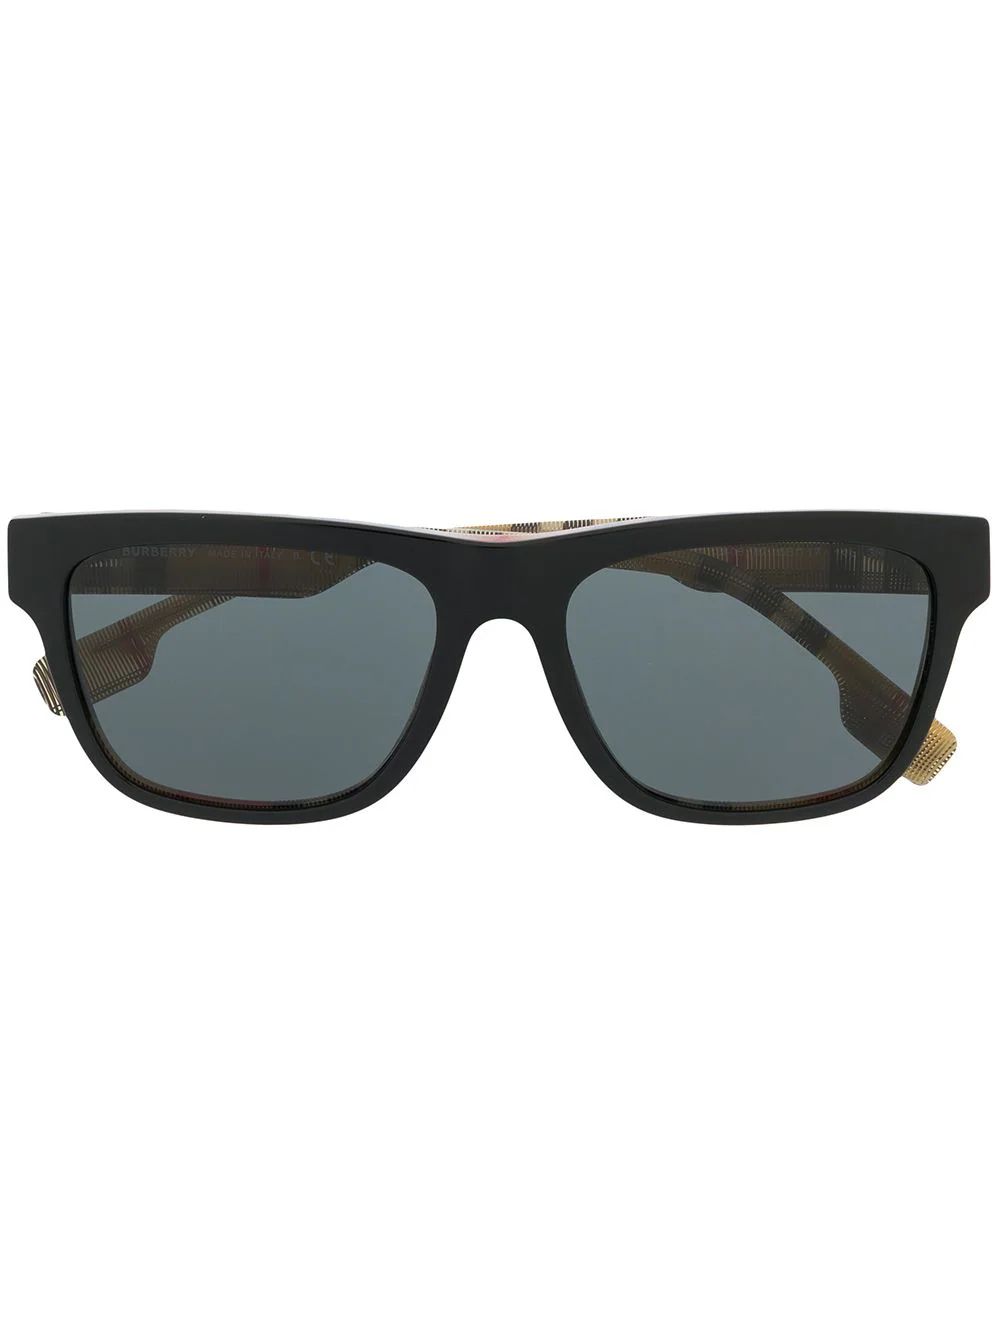 Vintage Check square frame sunglasses | Farfetch Global